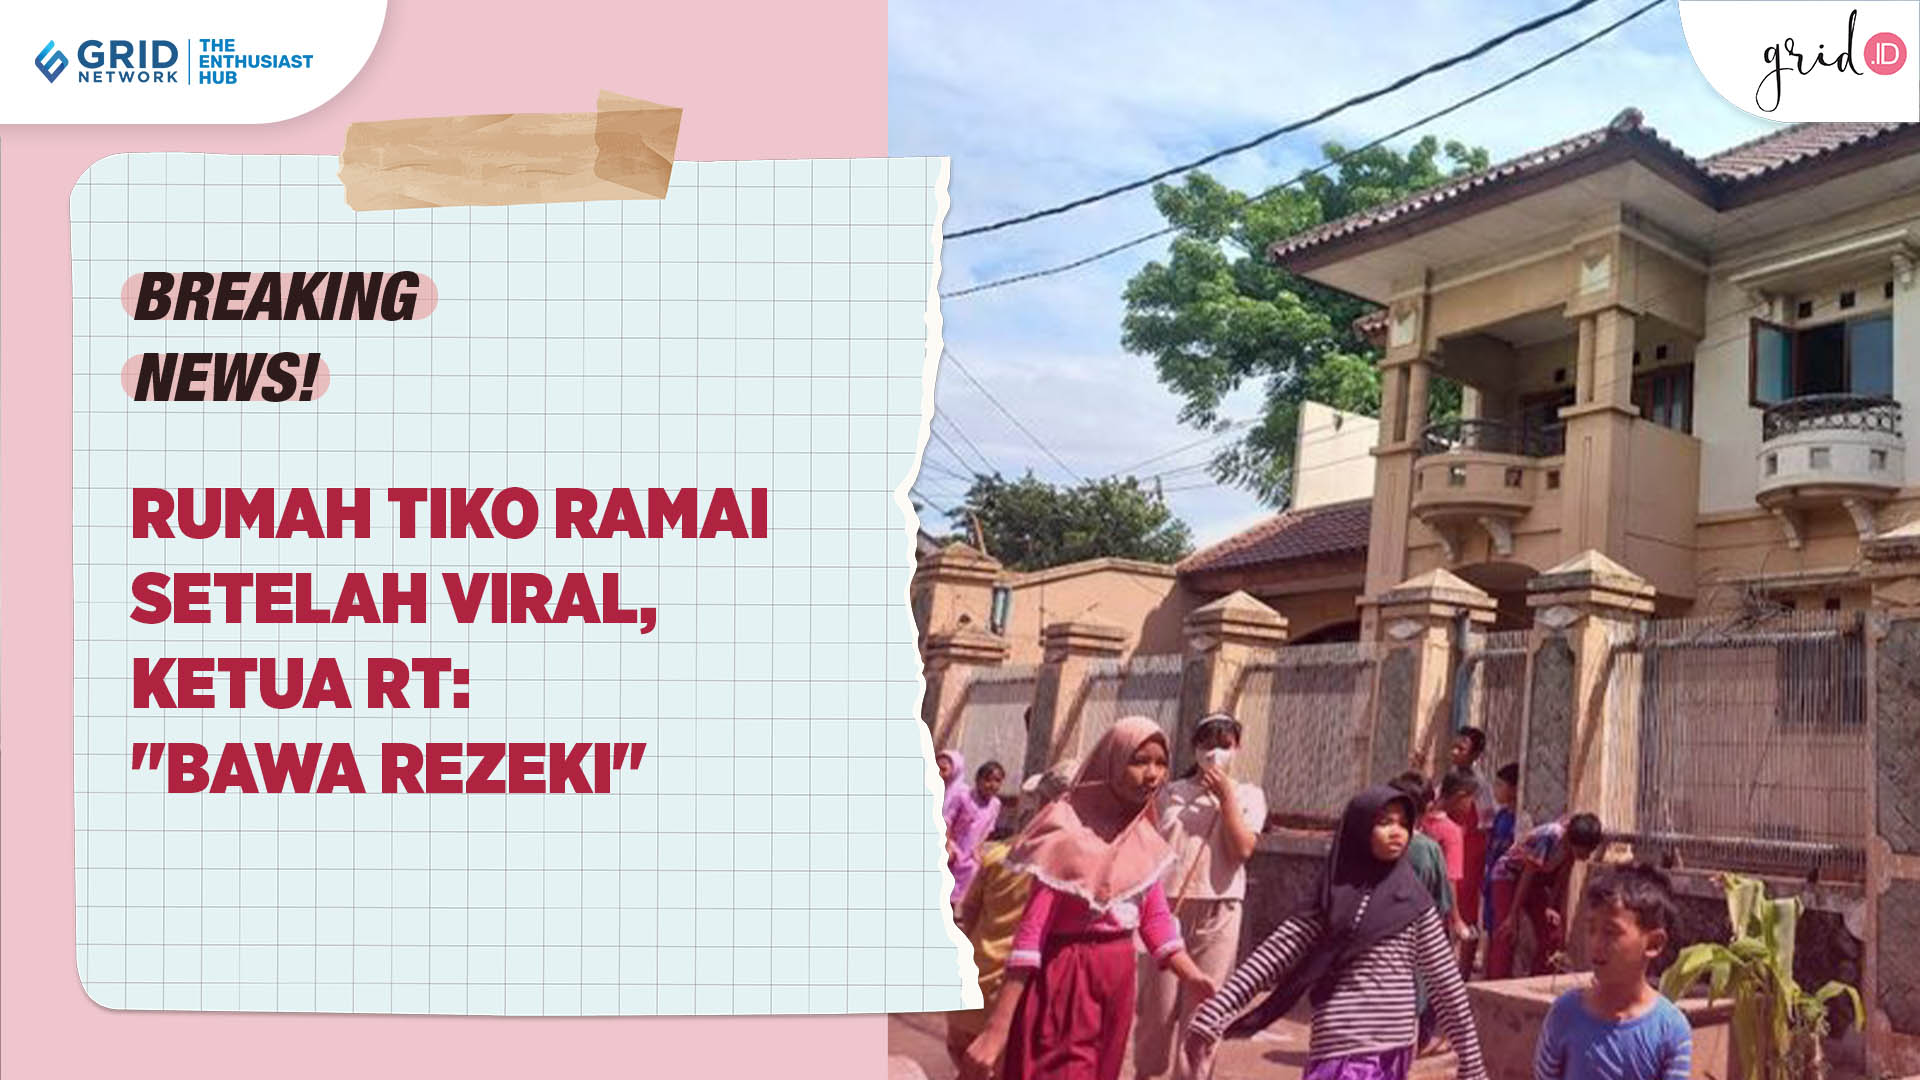 Ketua RT Pastikan Tetangga Tidak Terganggu dengan keramaian di Rumah Tiko Setelah Viral